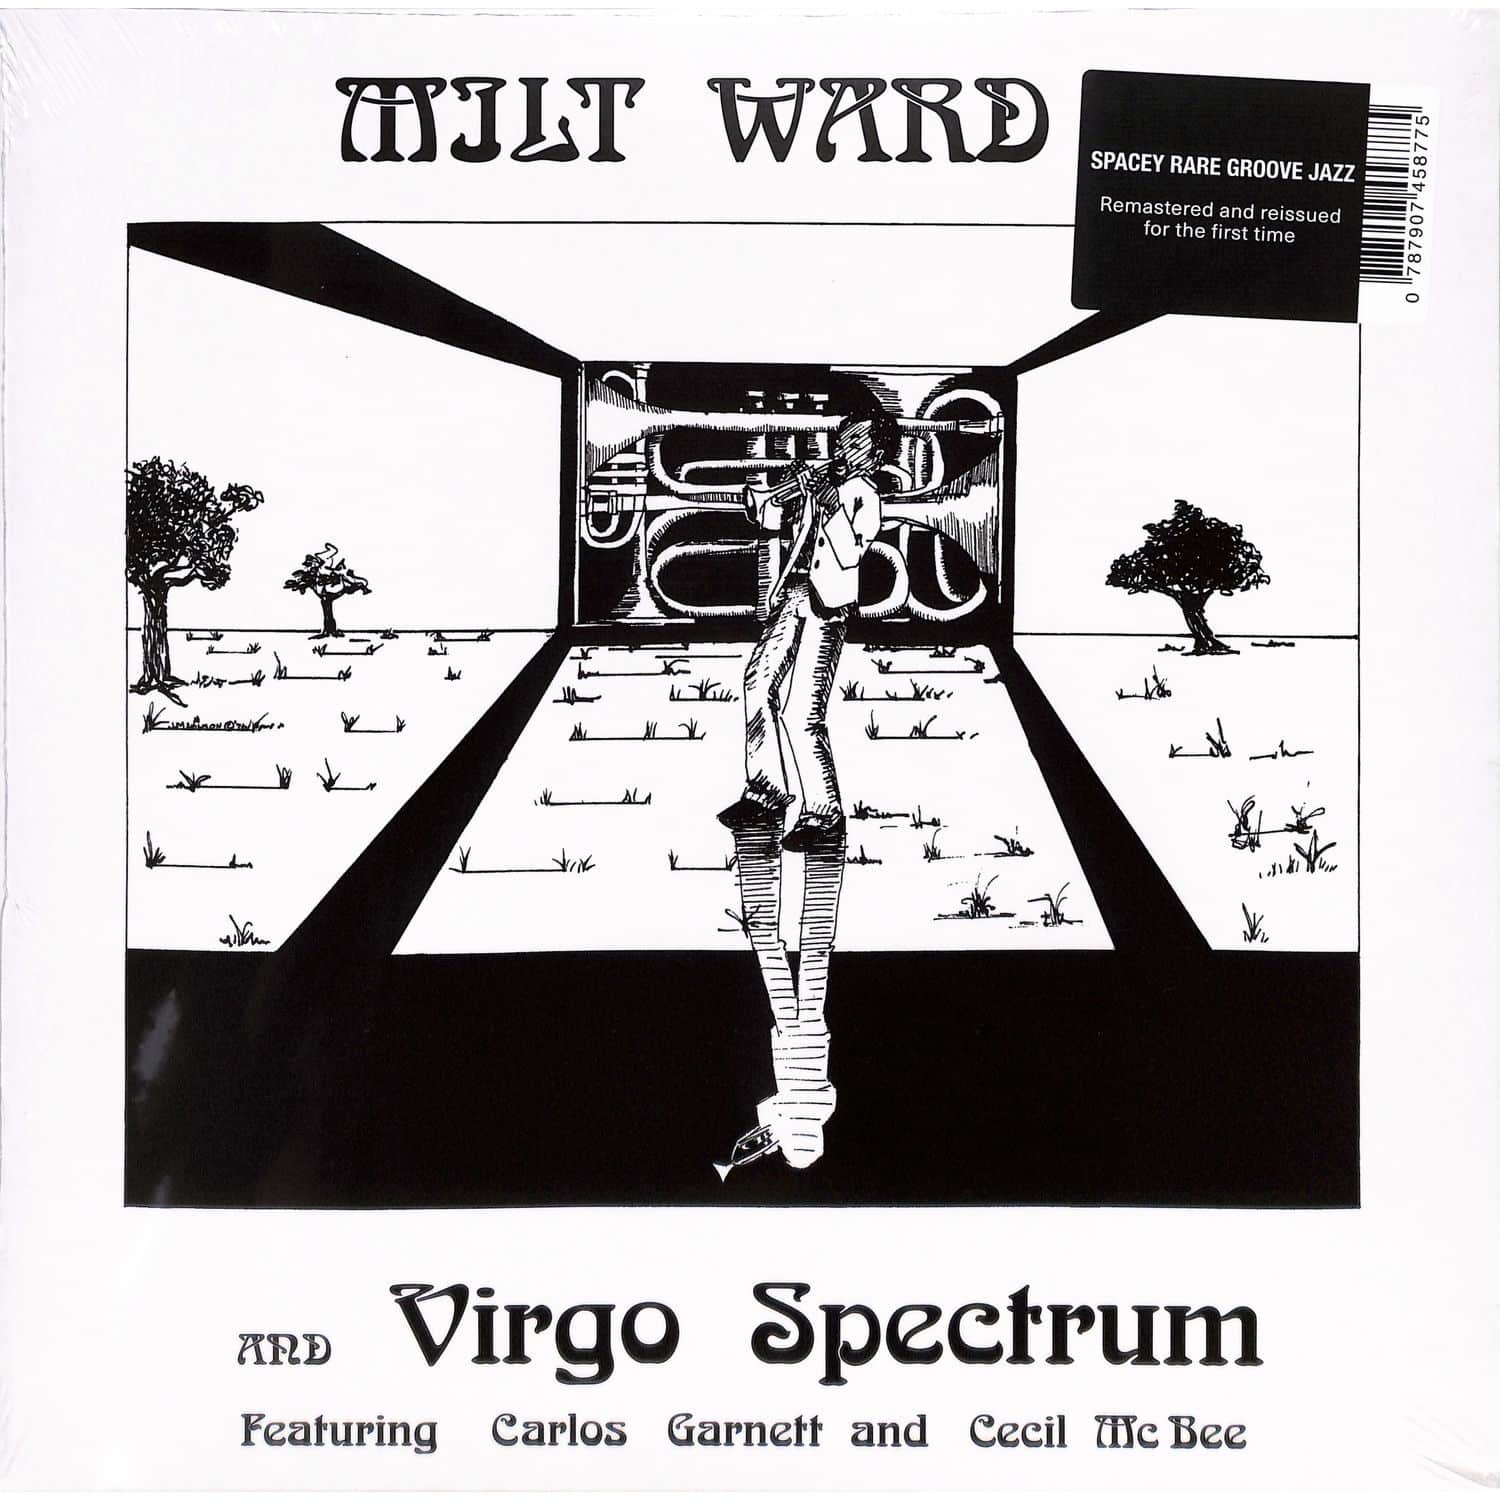 Milt Ward and Virgo Spectrum - SELF-TITLED 